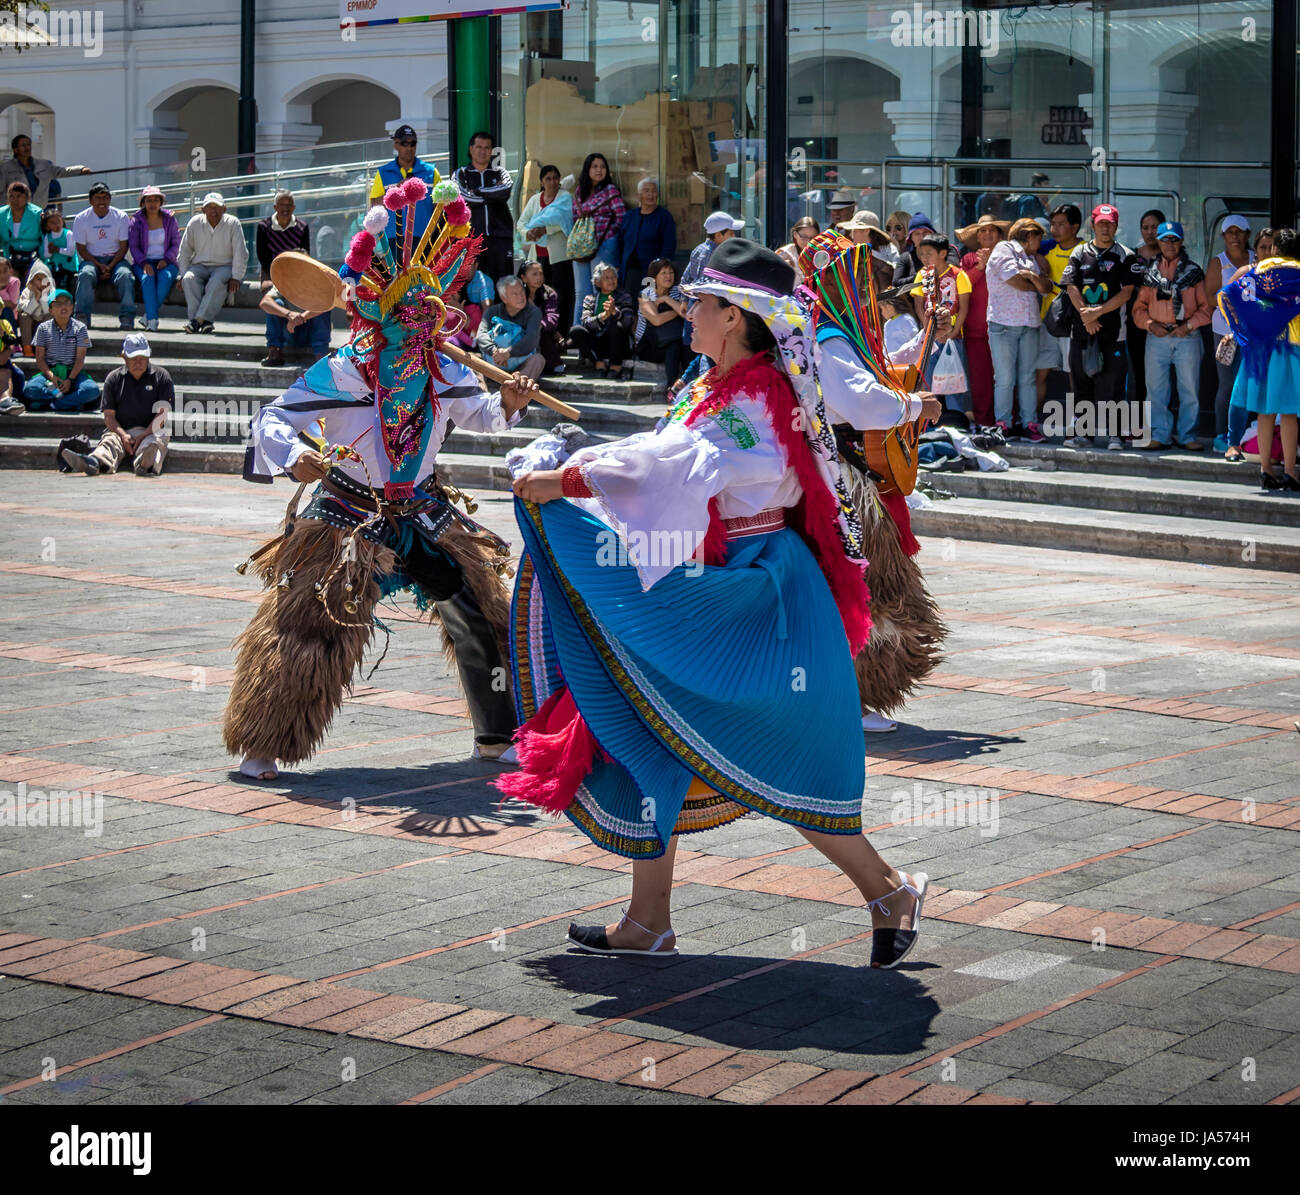 Gruppe in Tracht ecuadorianischen traditionellen Tanz - Quito, Ecuador Stockfoto